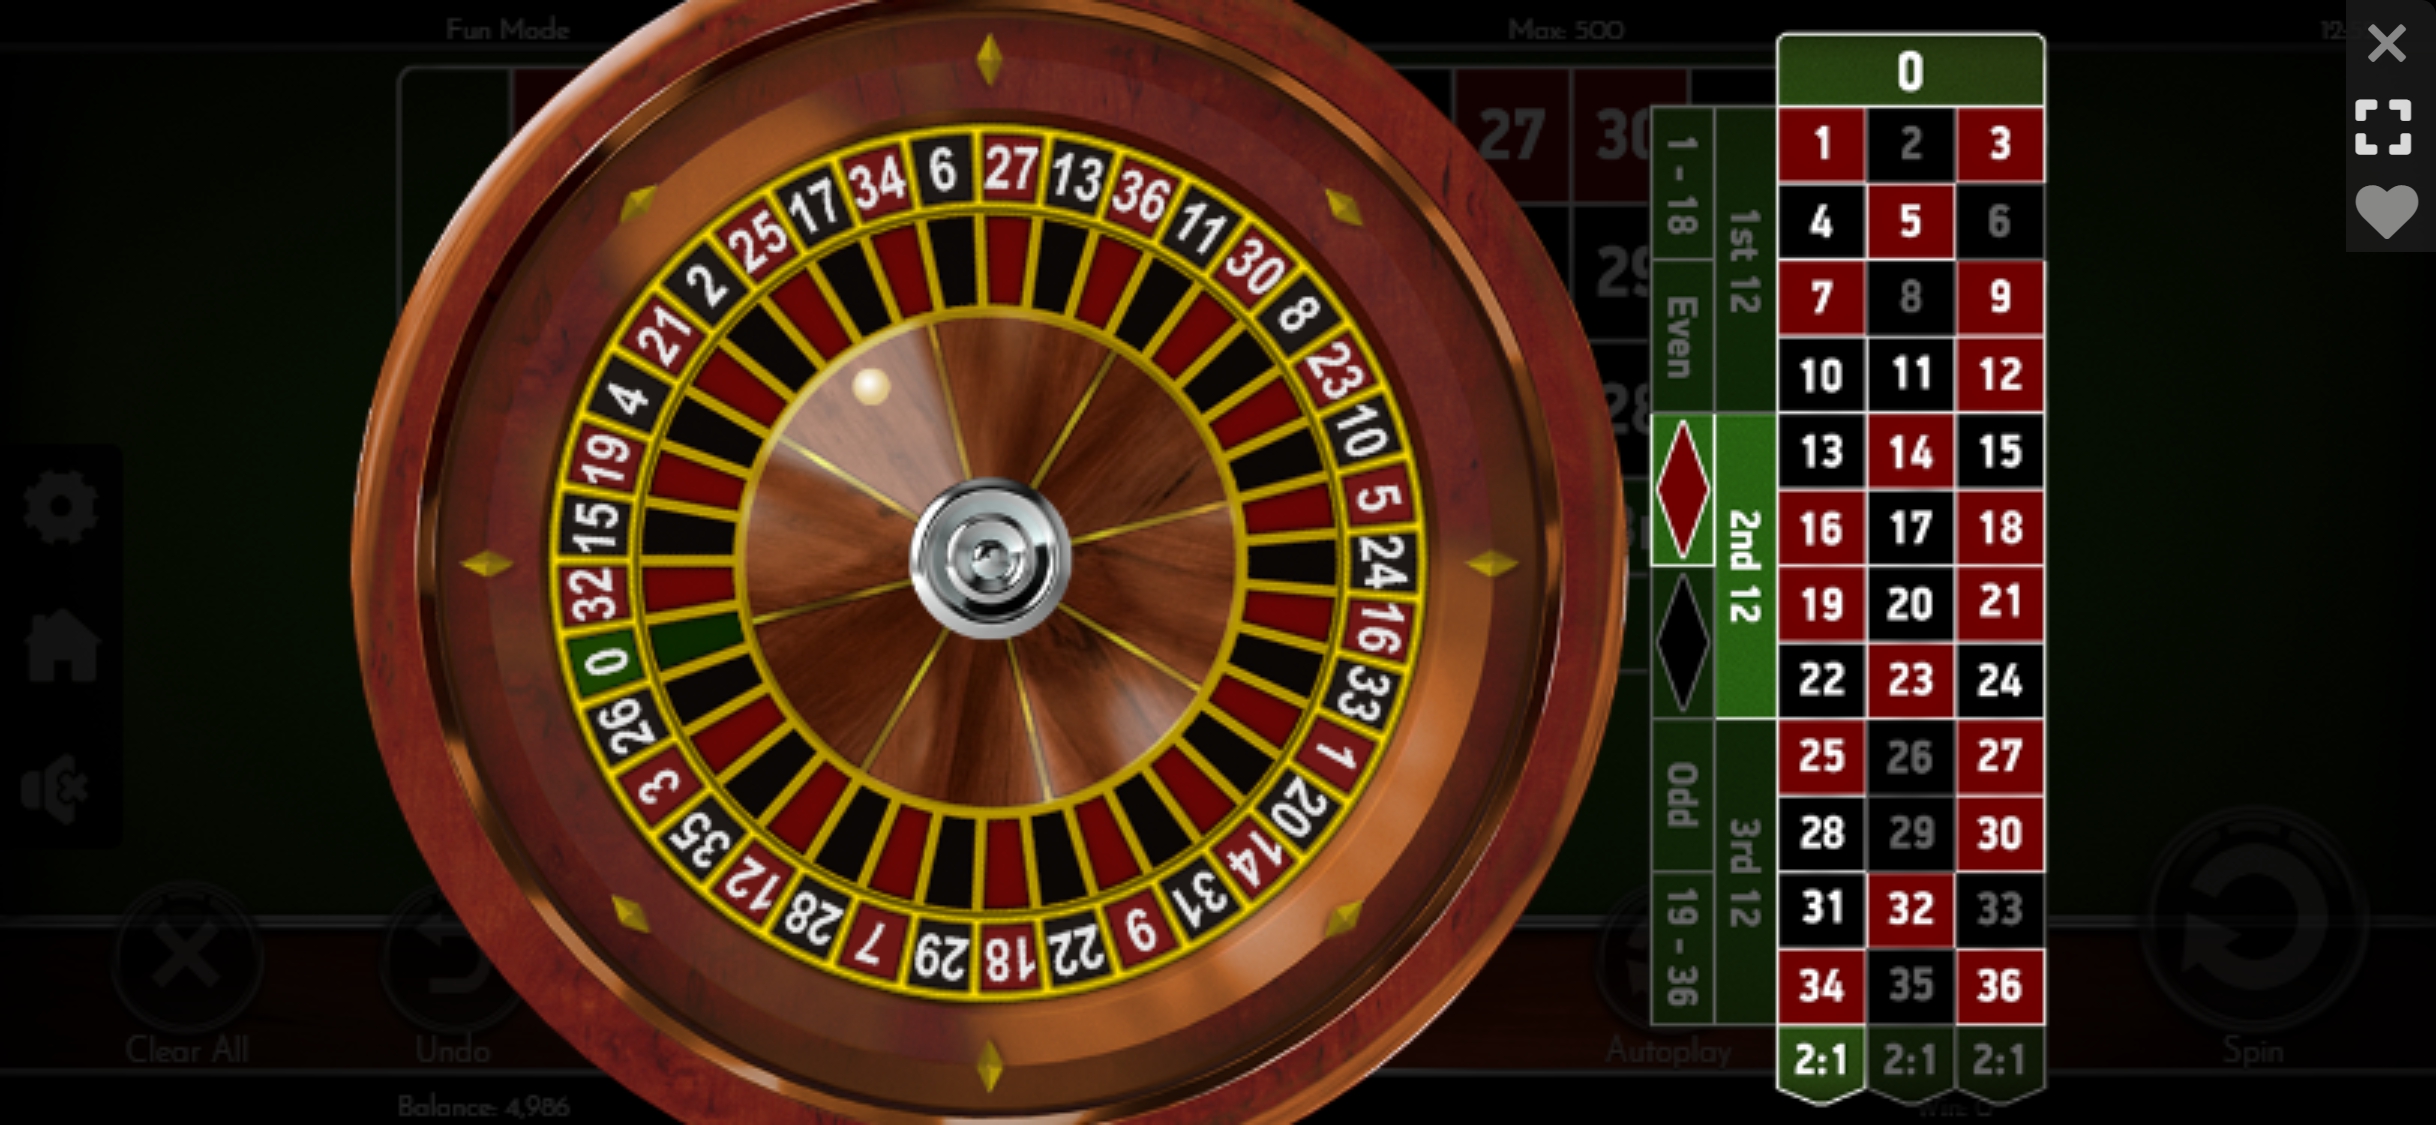 Play 24 Bet Casino Mobile Casino Games Review